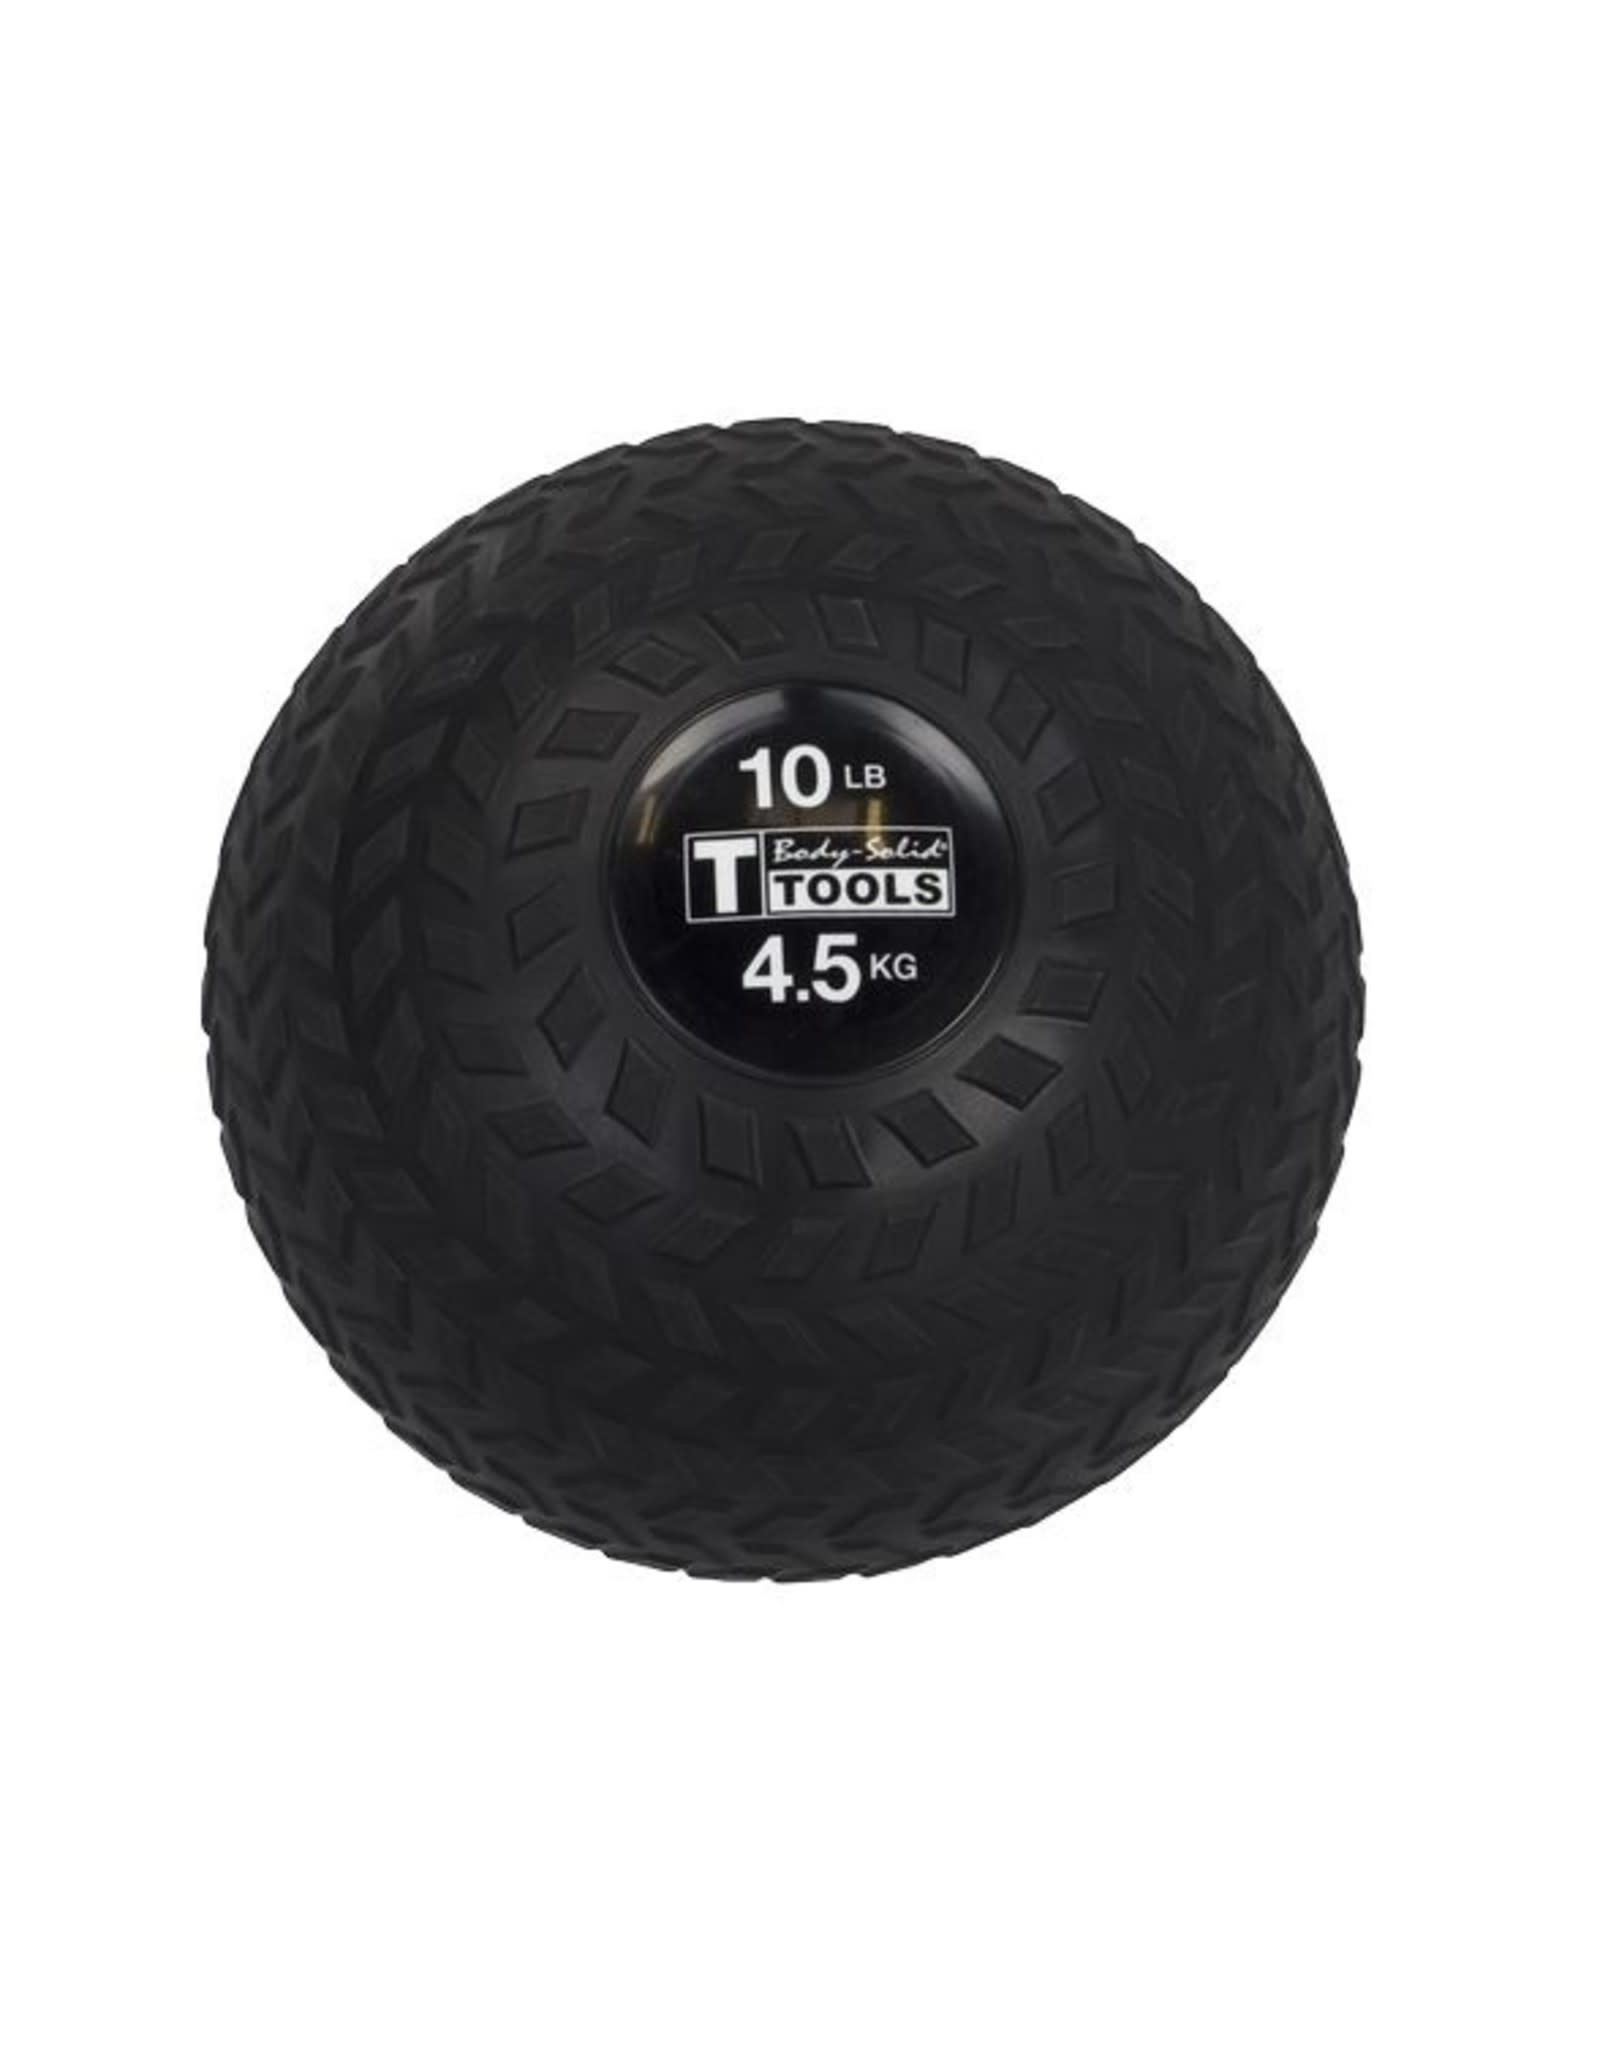 Body-Solid Tire Tread Slam Ball